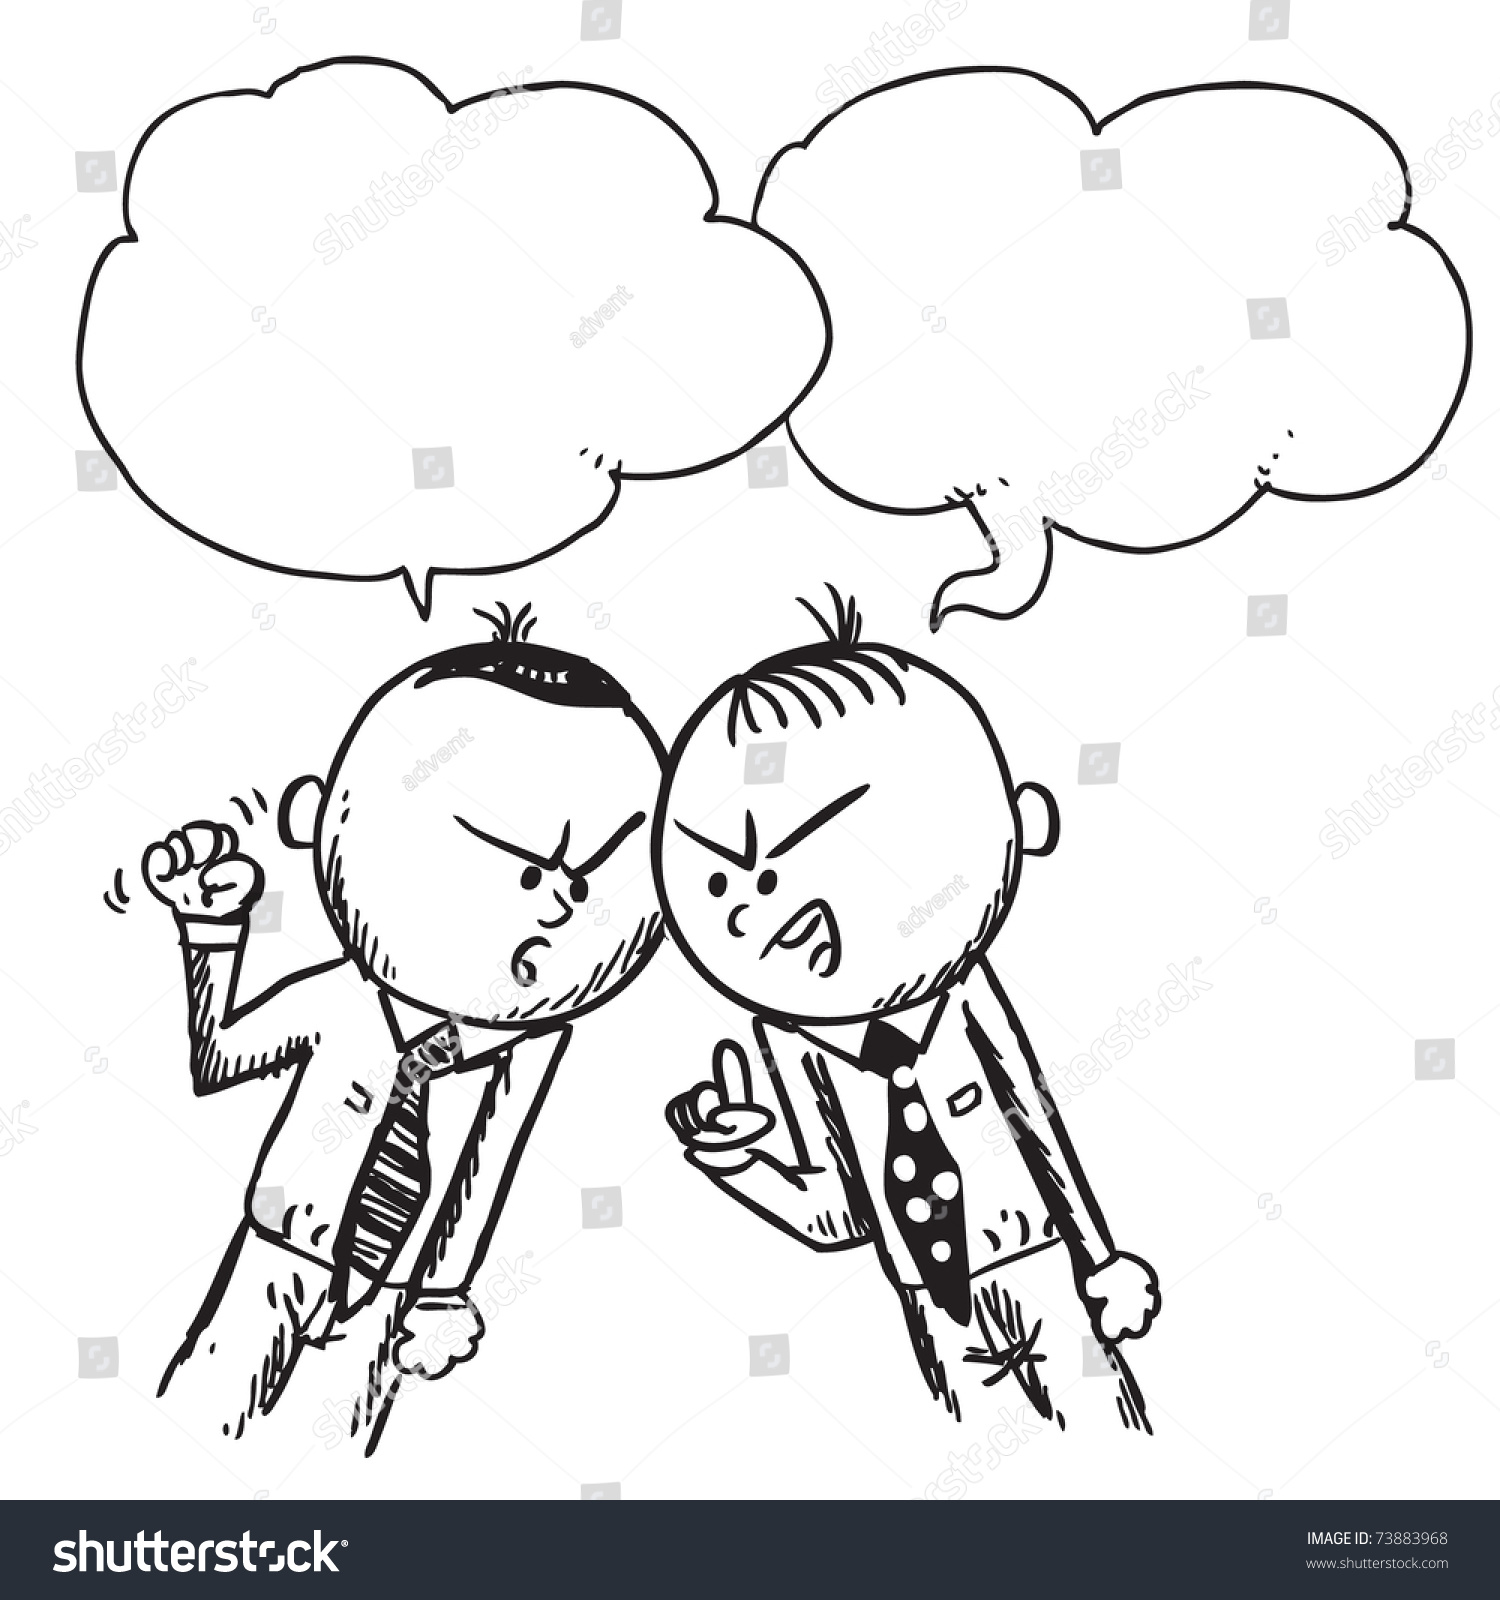 Sketchy Illustration Two Businessmen Arguing Stock Vector 73883968